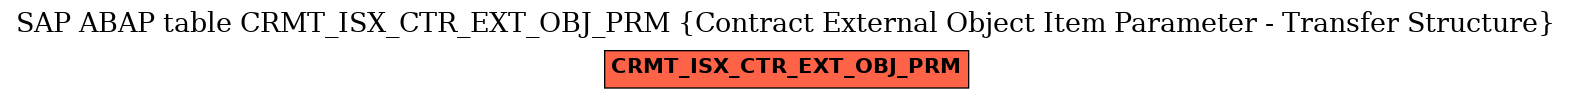 E-R Diagram for table CRMT_ISX_CTR_EXT_OBJ_PRM (Contract External Object Item Parameter - Transfer Structure)